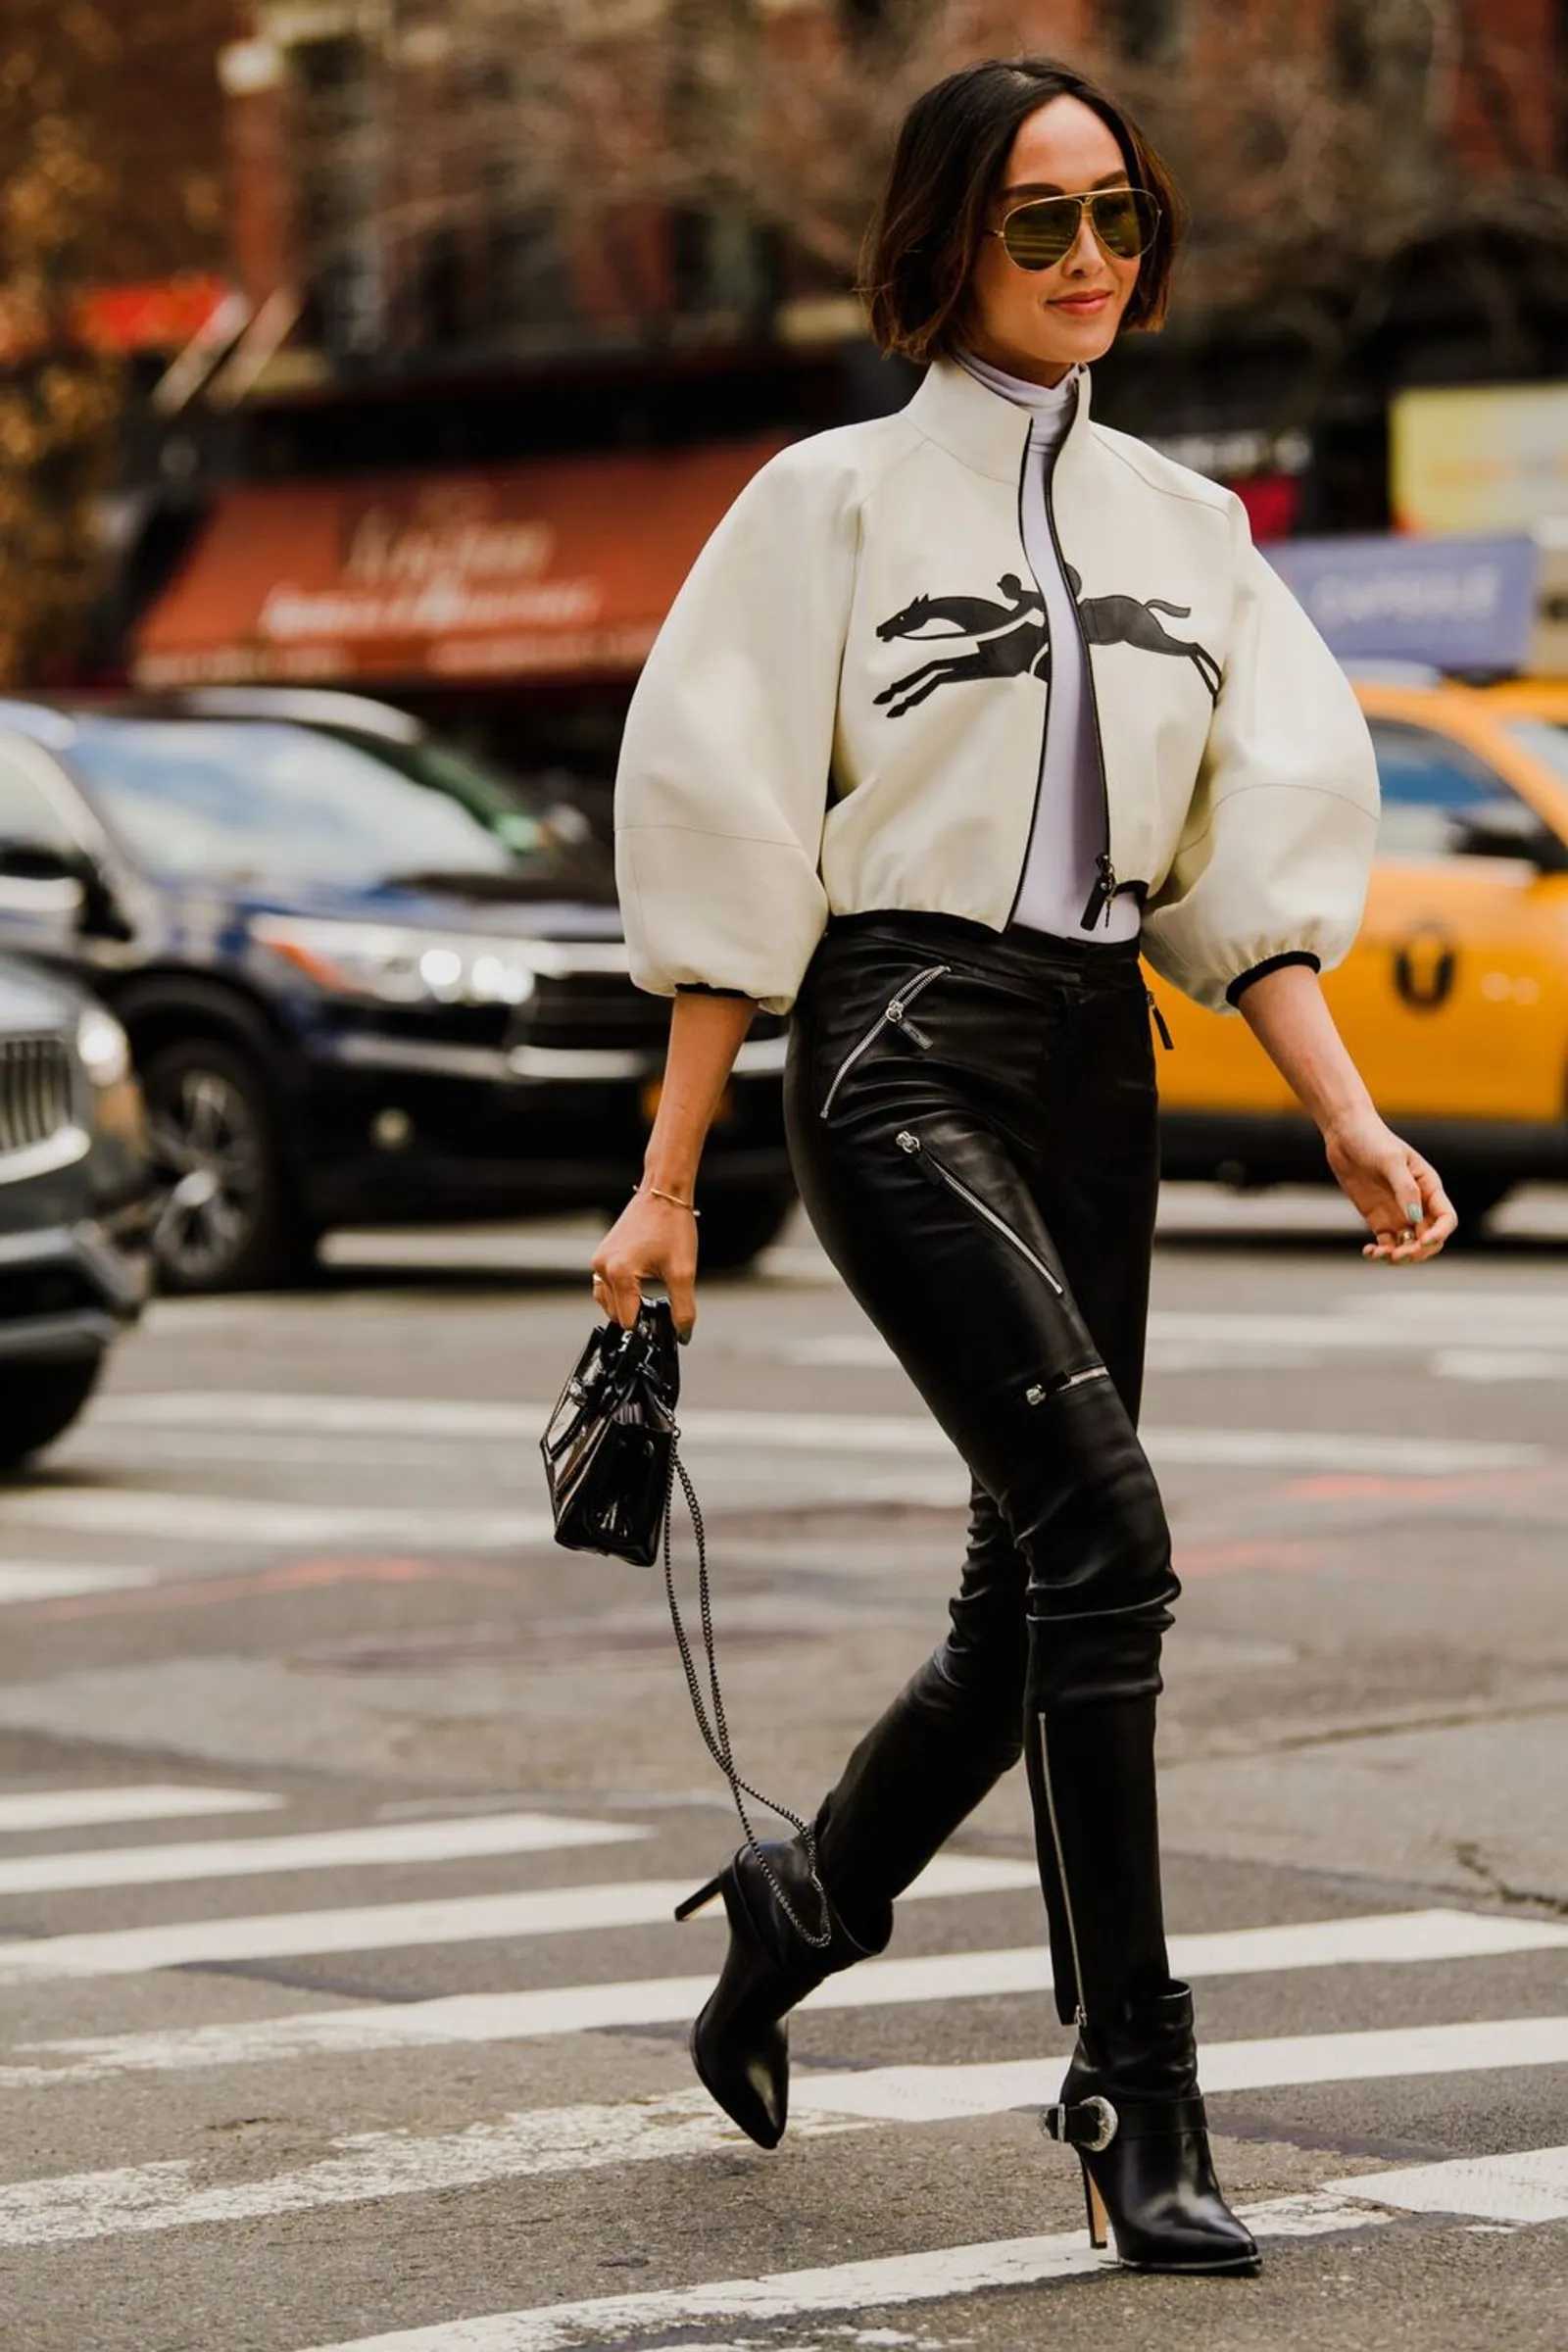 Leather Outfit jadi Trend di New York Fashion Week 2020, Berani Coba?